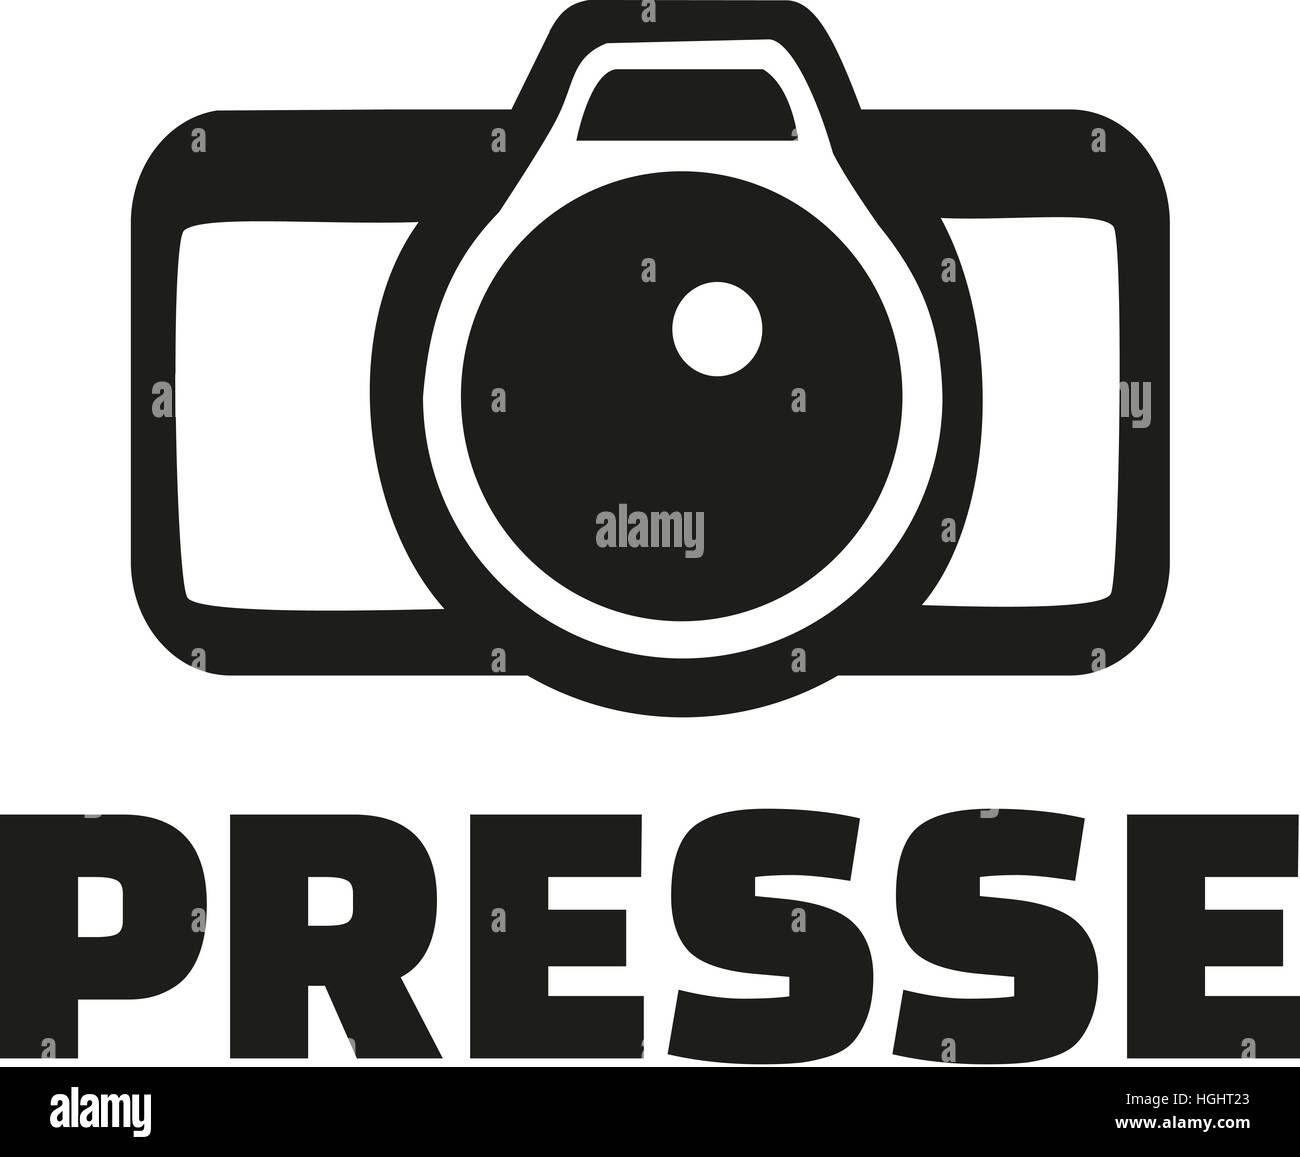 Press with camera icon - german Stock Photo